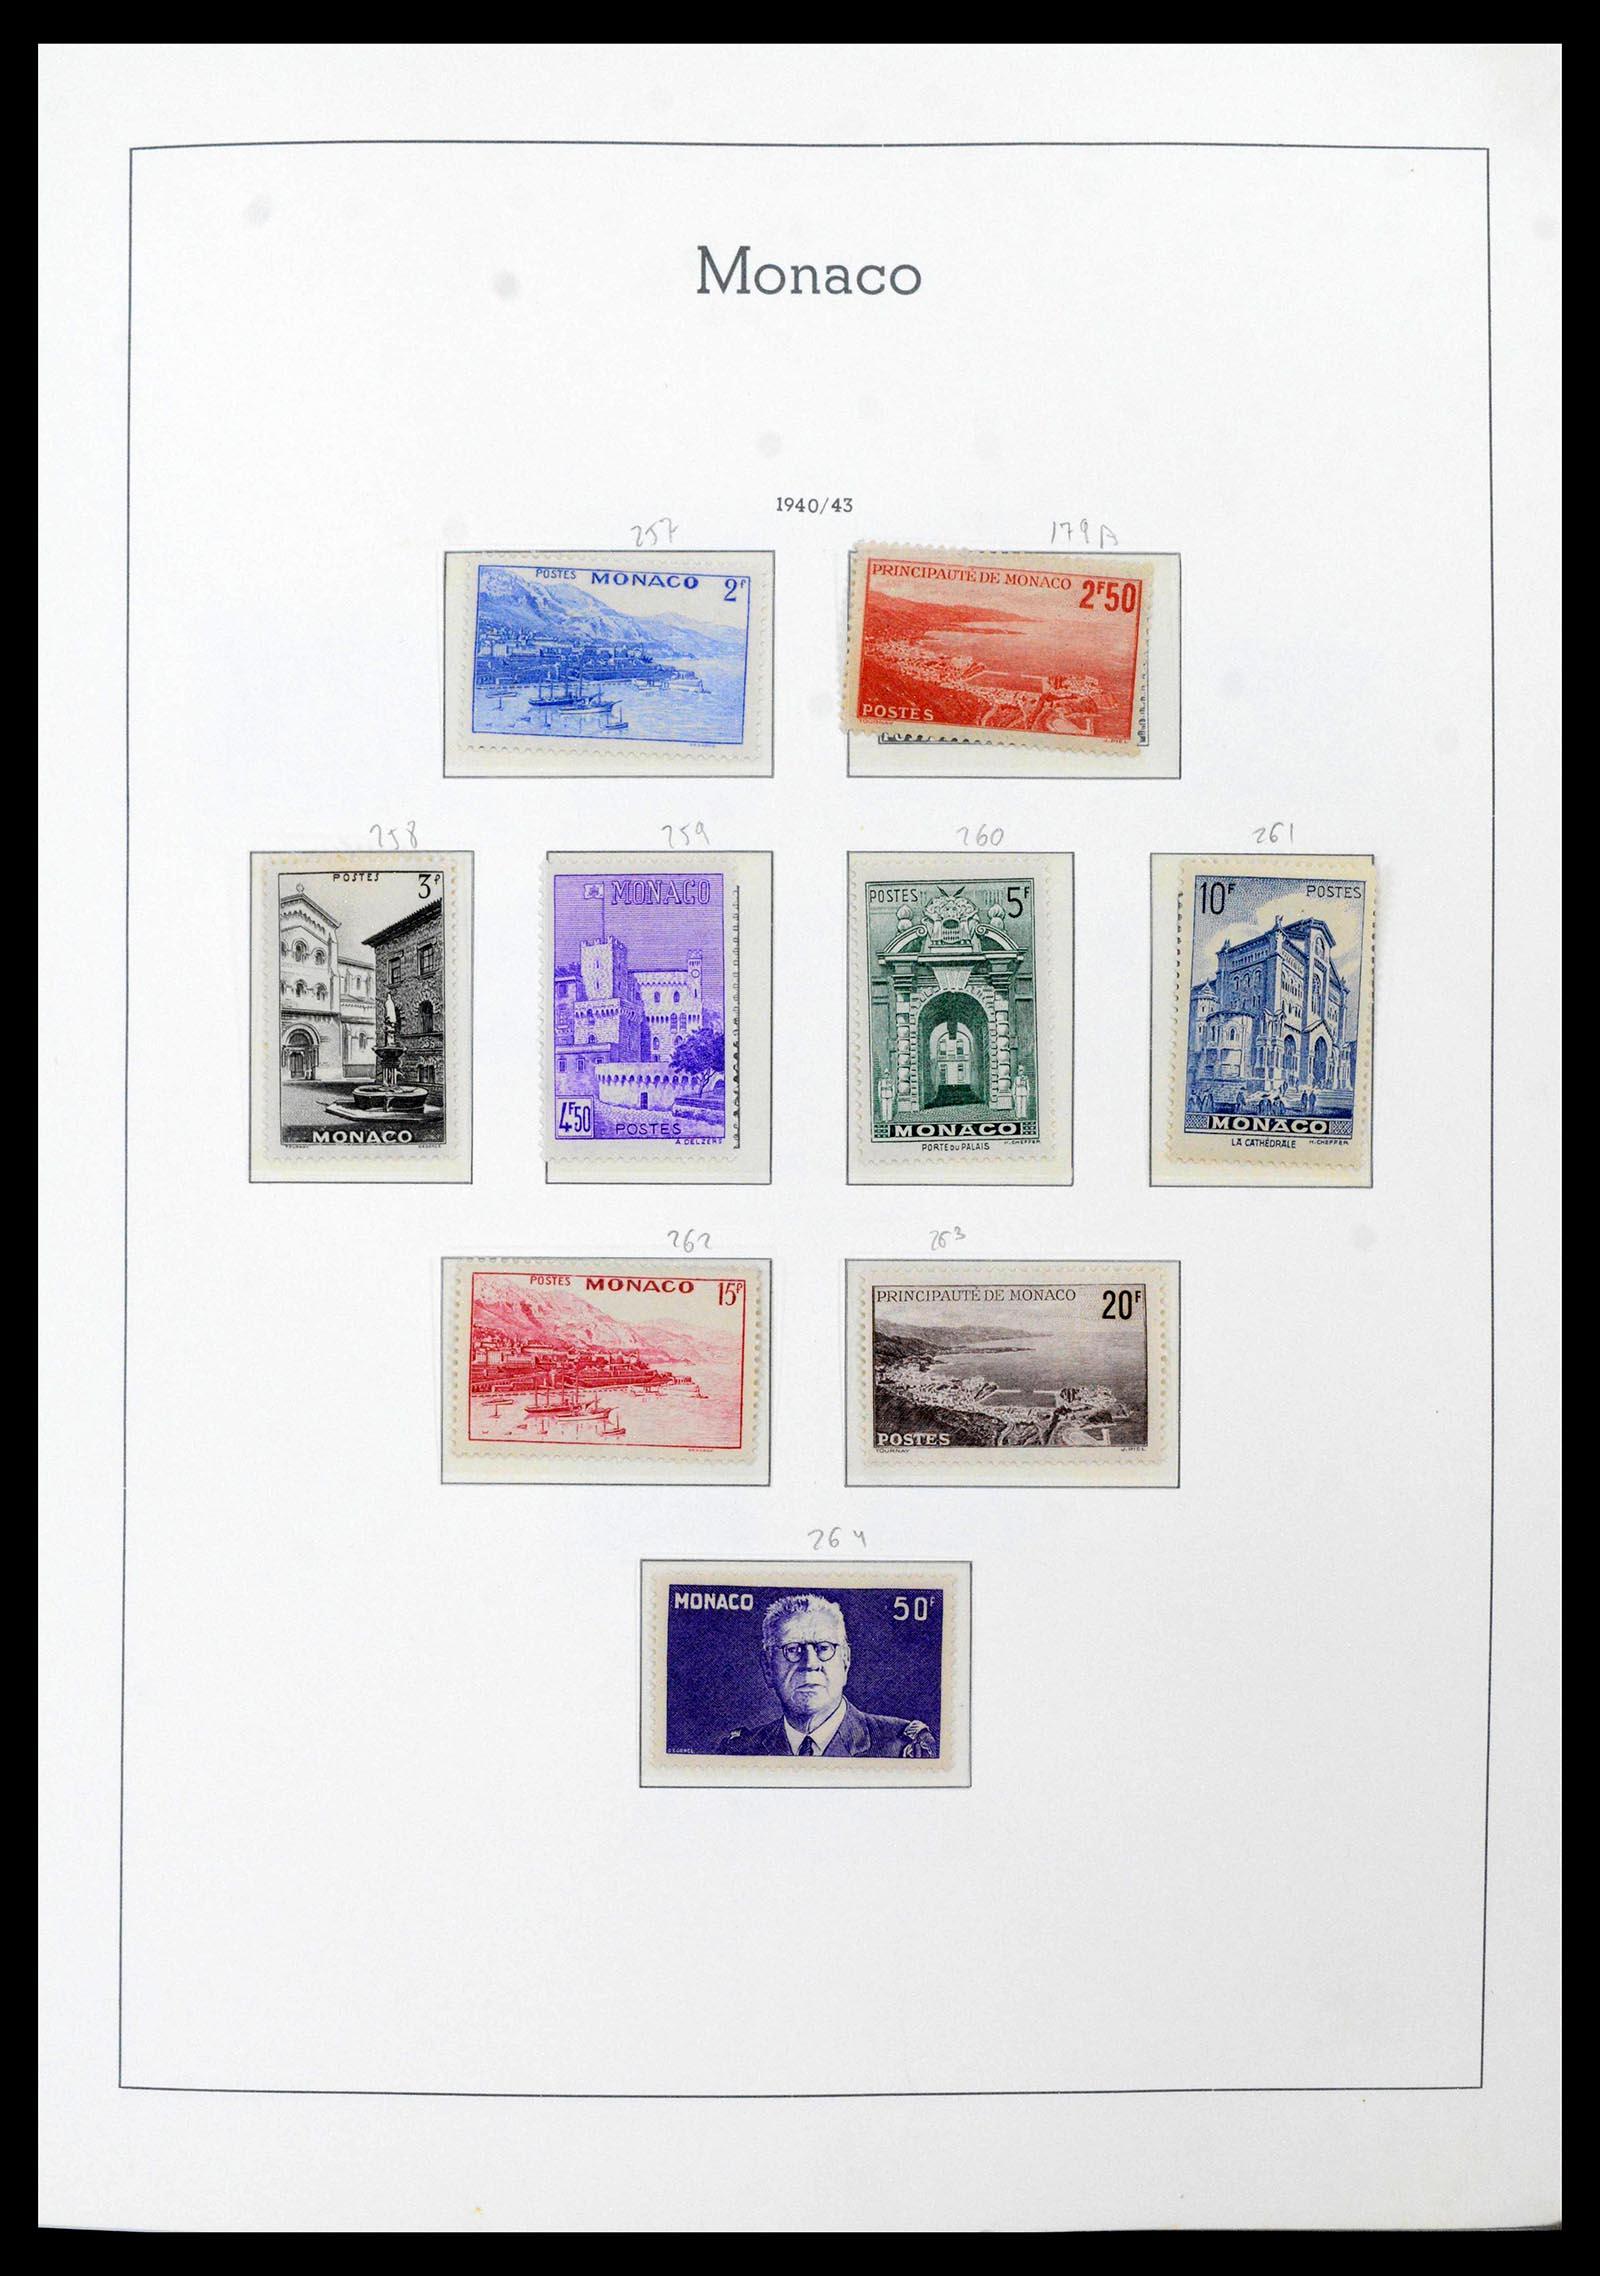 39250 0020 - Stamp collection 39250 Monaco 1885-1995.